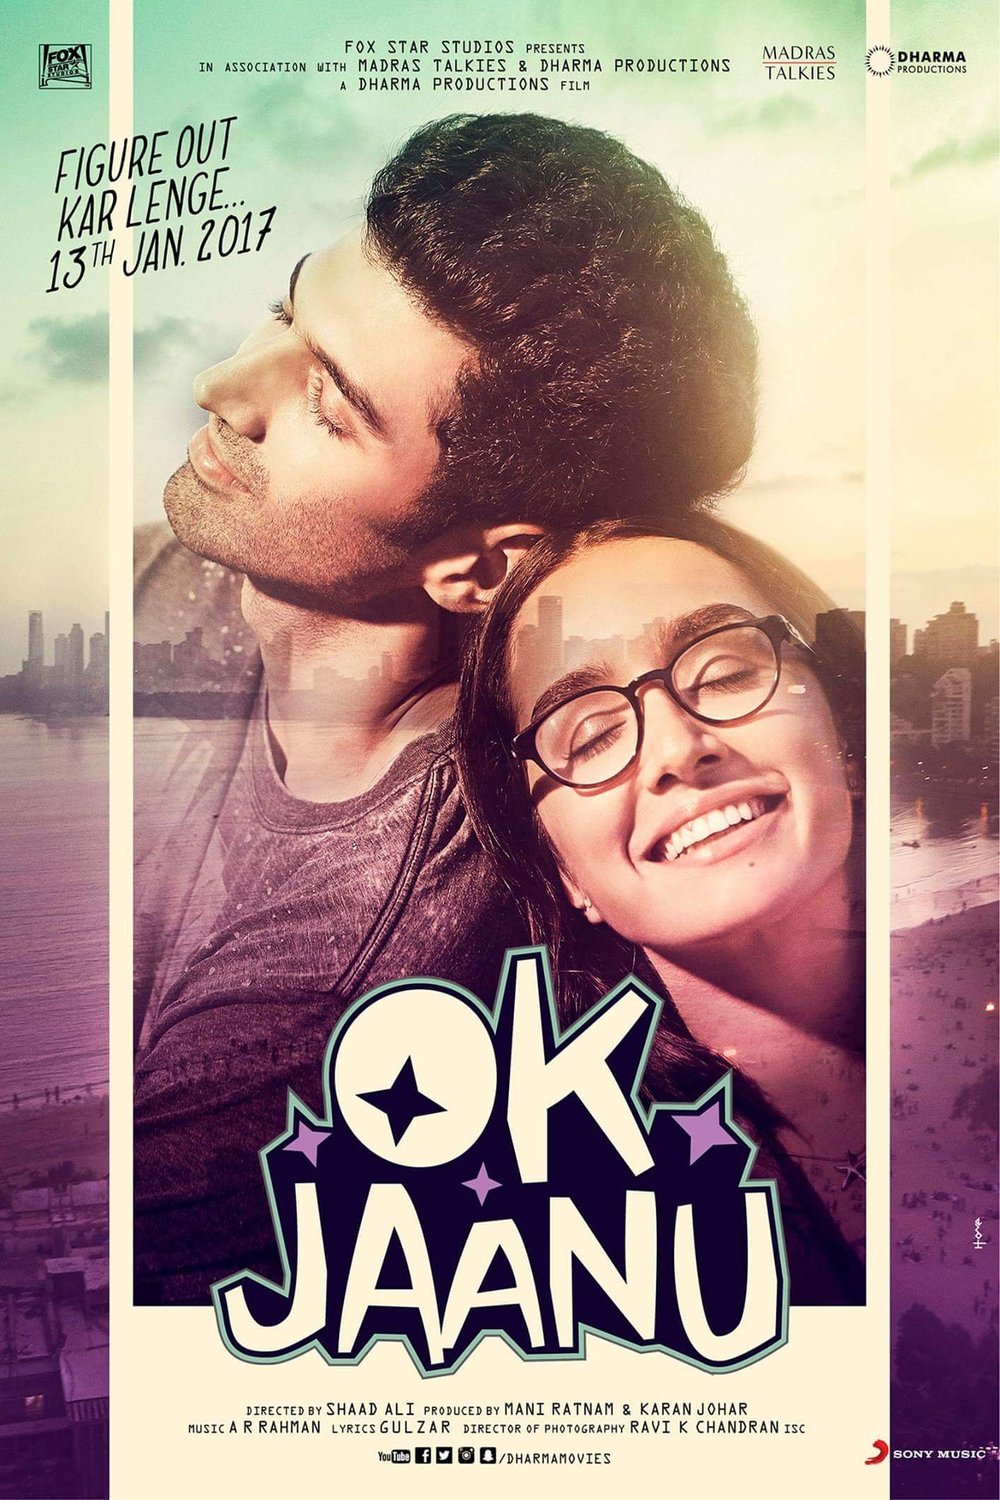 Hindi poster of the movie OK Jaanu